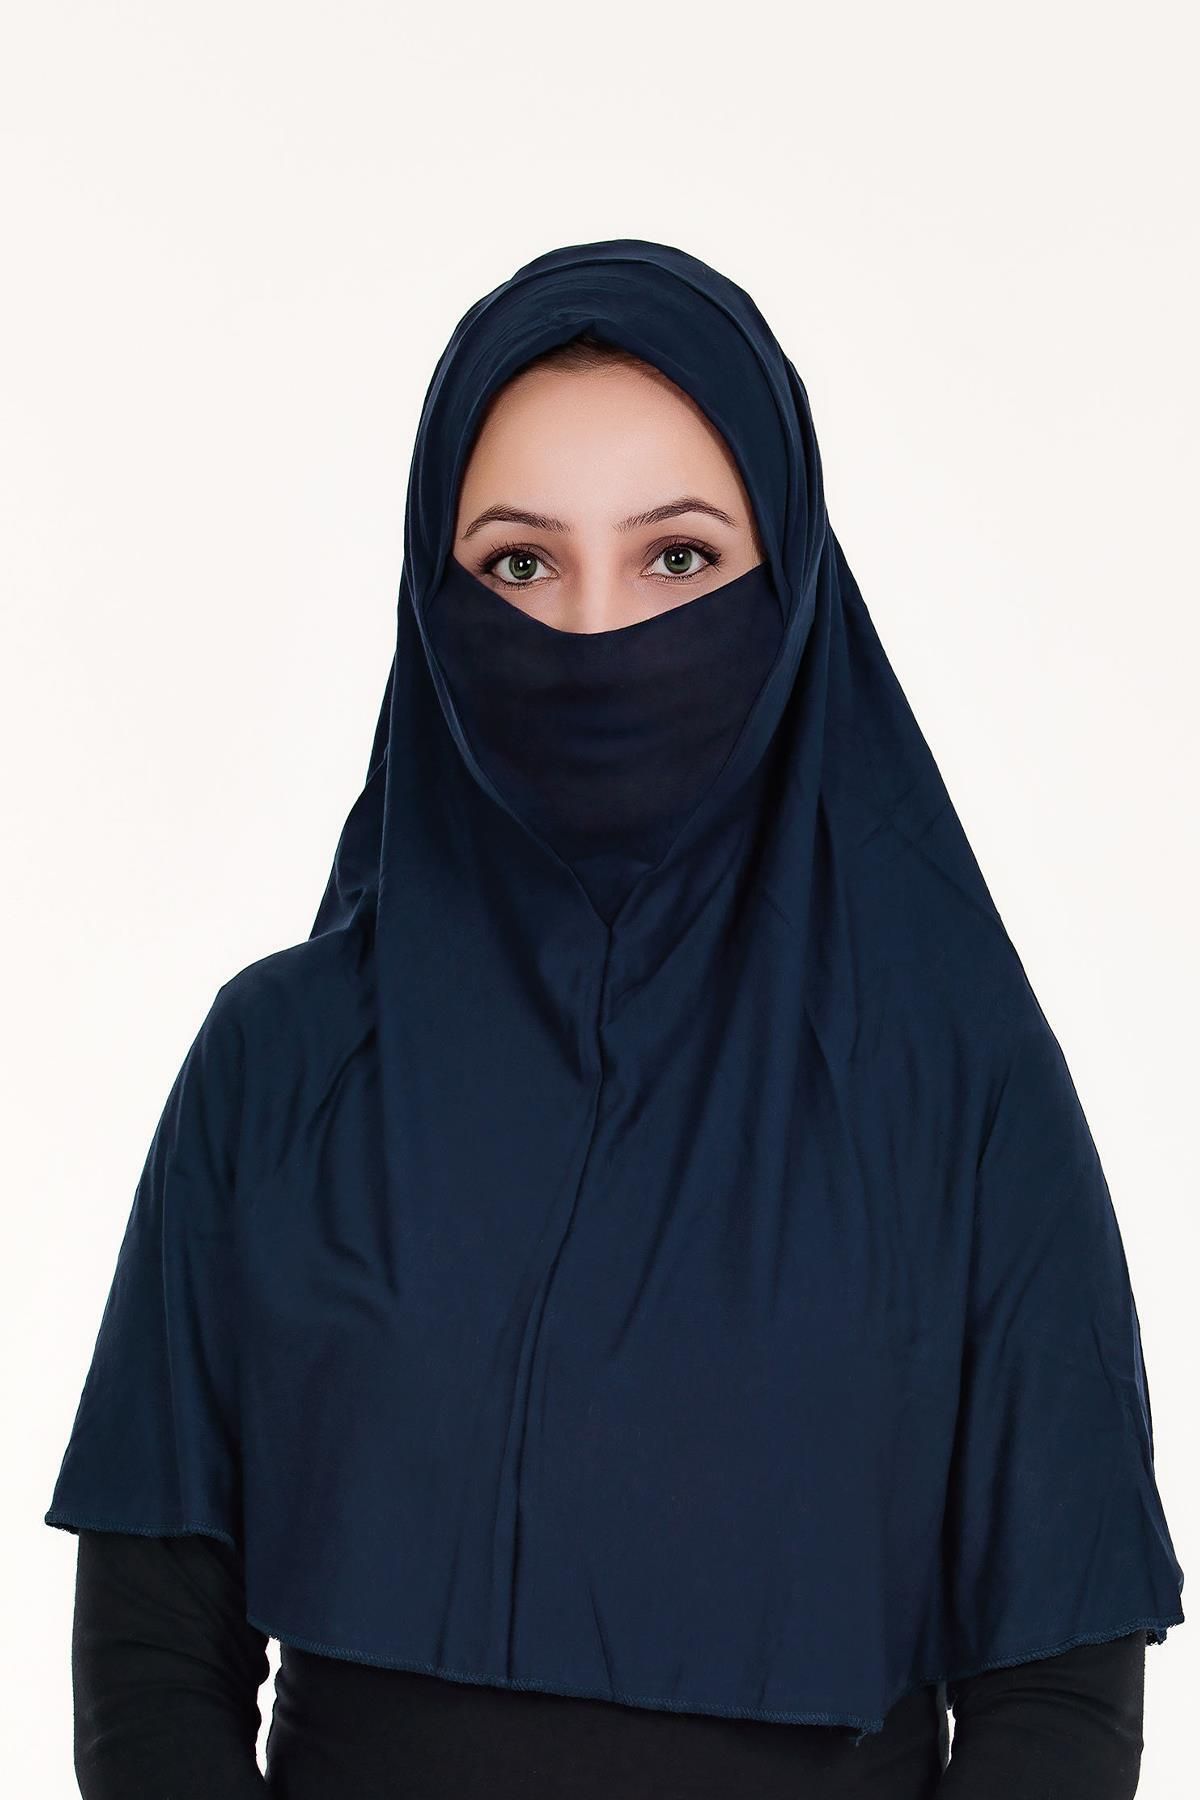 Sensu Peçeli Hazır Türban Pratik Şal Hijab Namaz Örtüsü